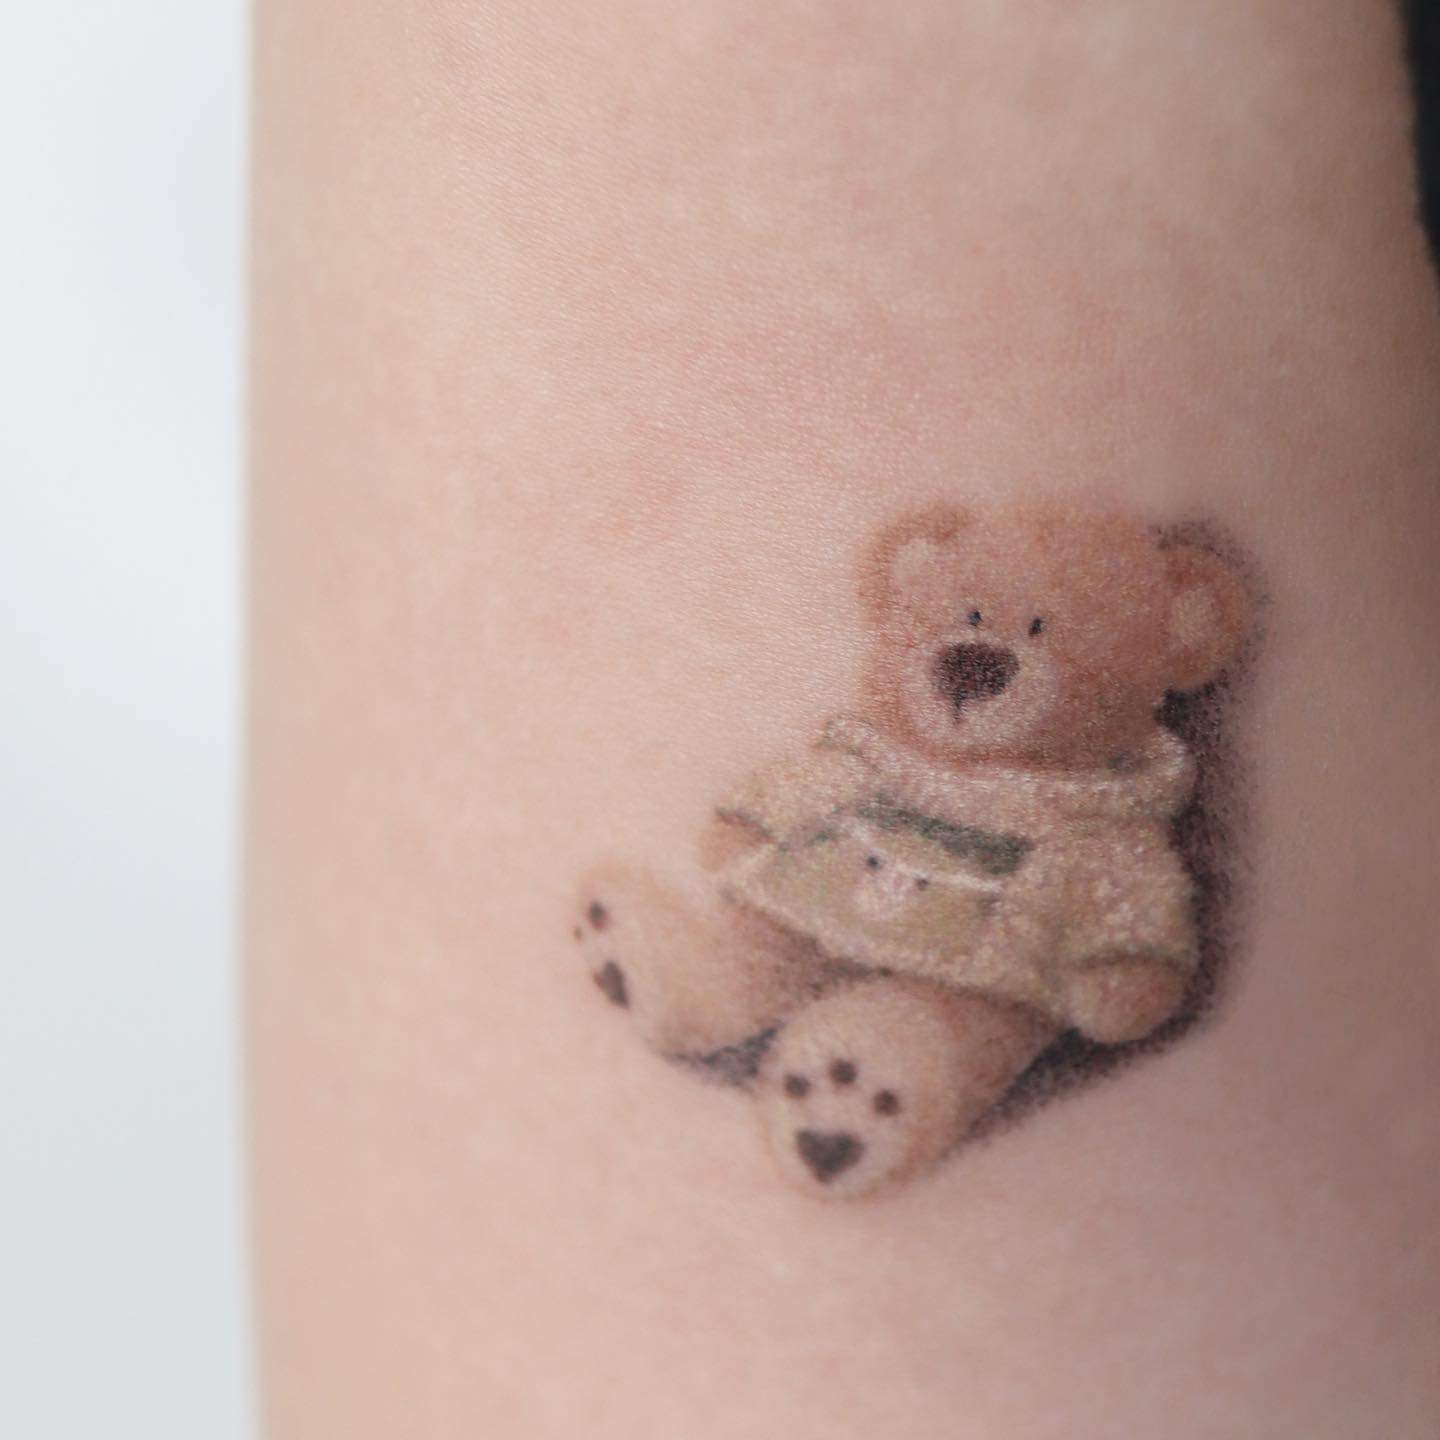 12 Lovable Teddy Bear Tattoos  Tattoodo